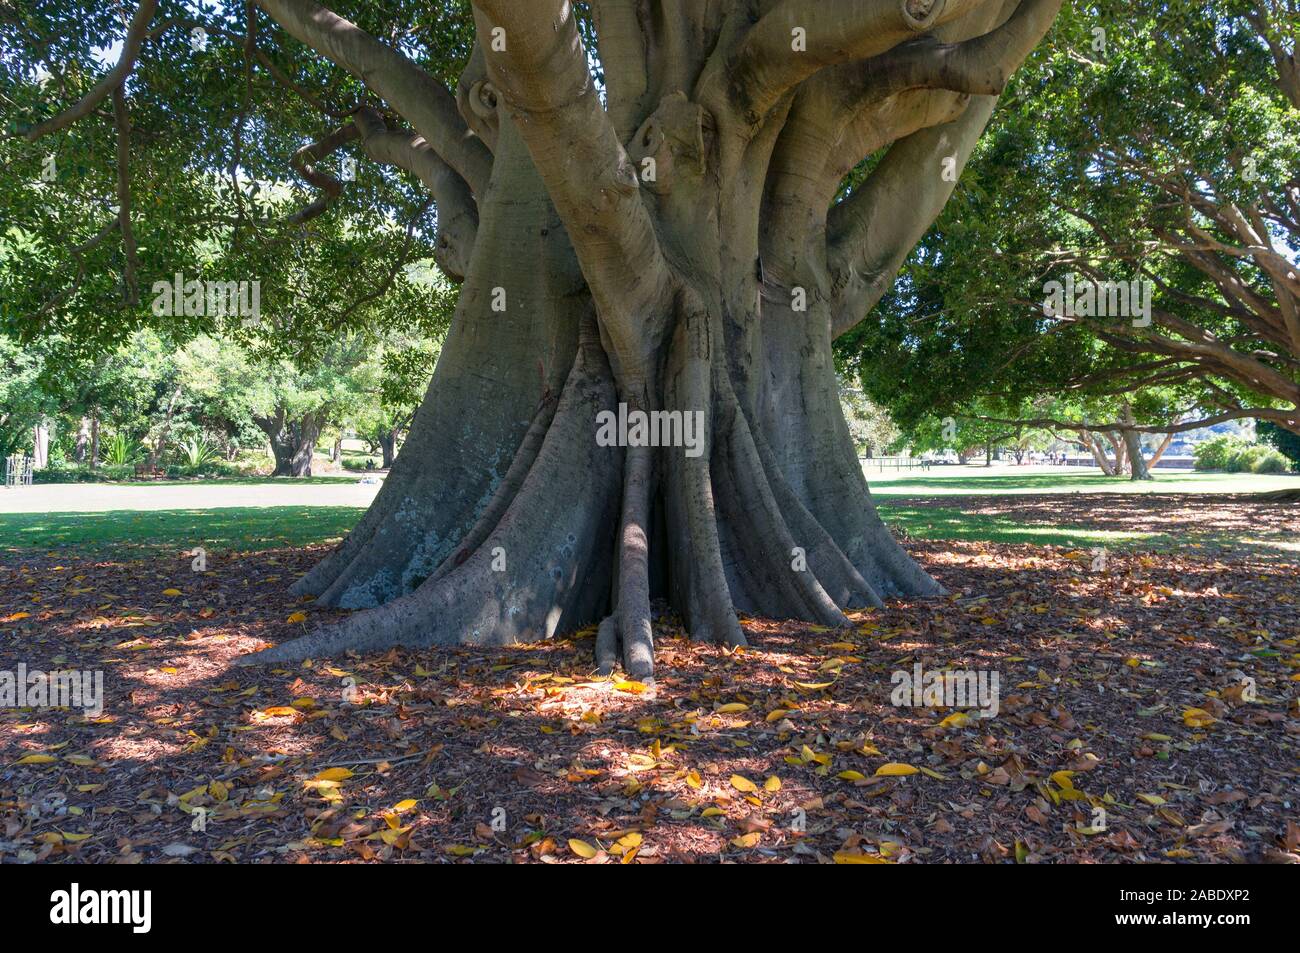 Big eucalyptus tree with folded trunk on sunny day Stock Photo